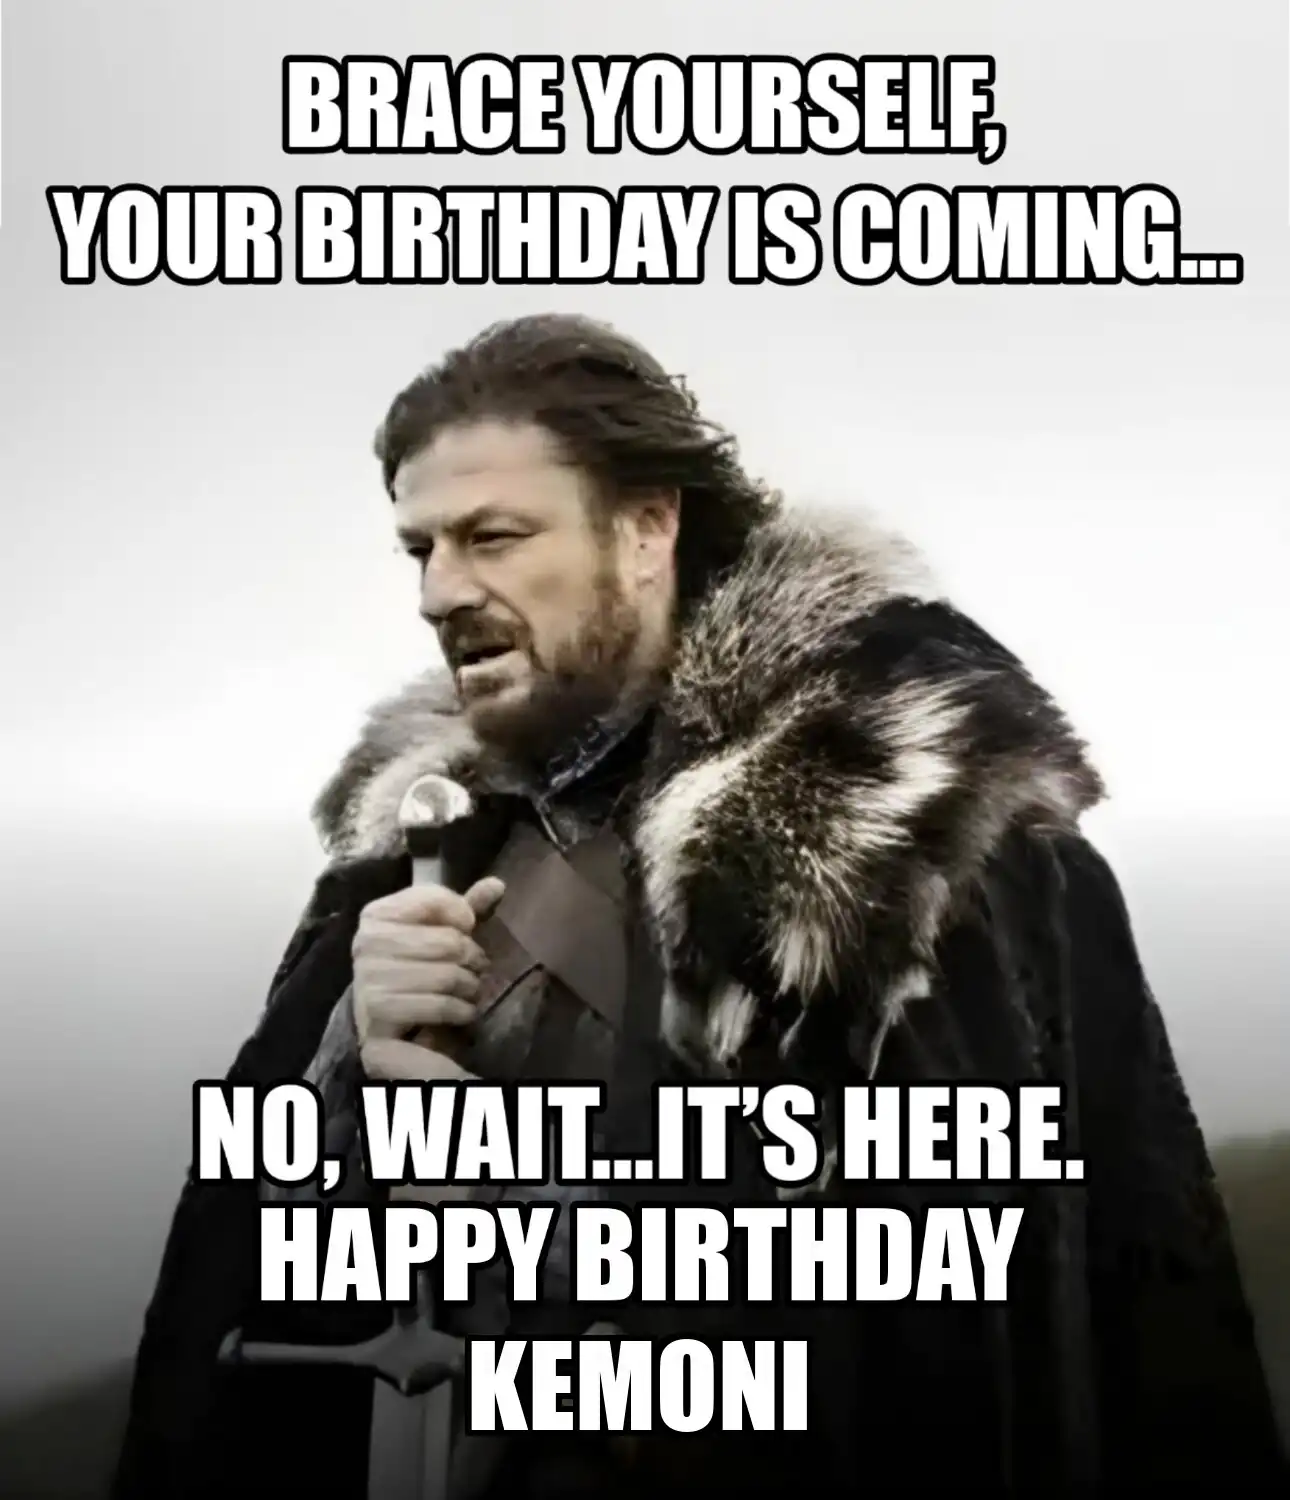 Happy Birthday Kemoni Brace Yourself Your Birthday Is Coming Meme